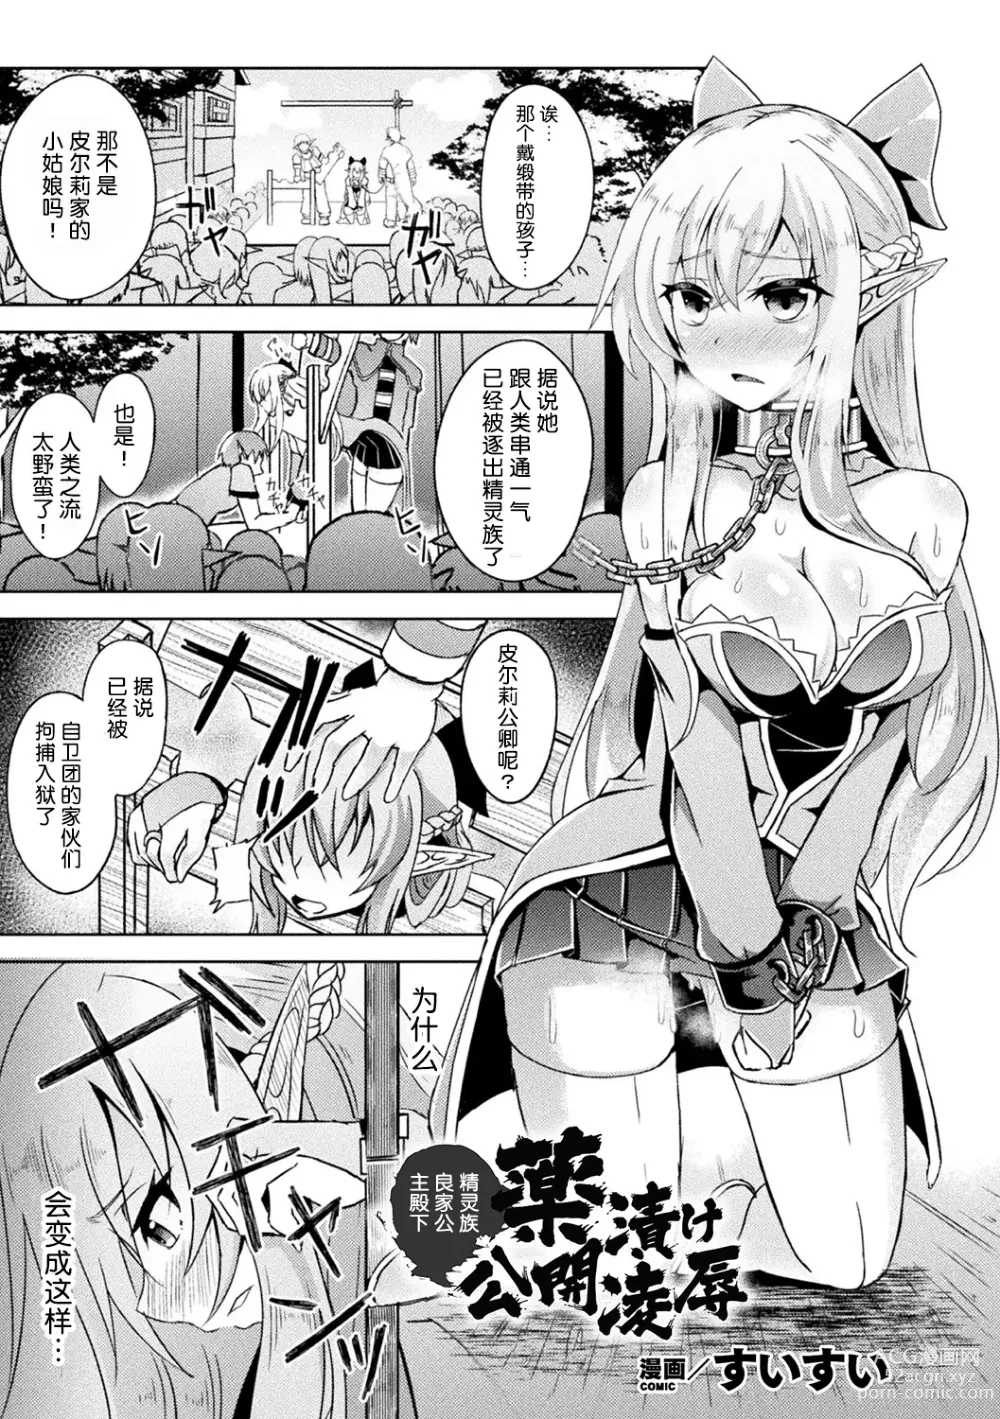 Page 1 of manga 精靈族良家公主殿下薬漬け公開陵辱